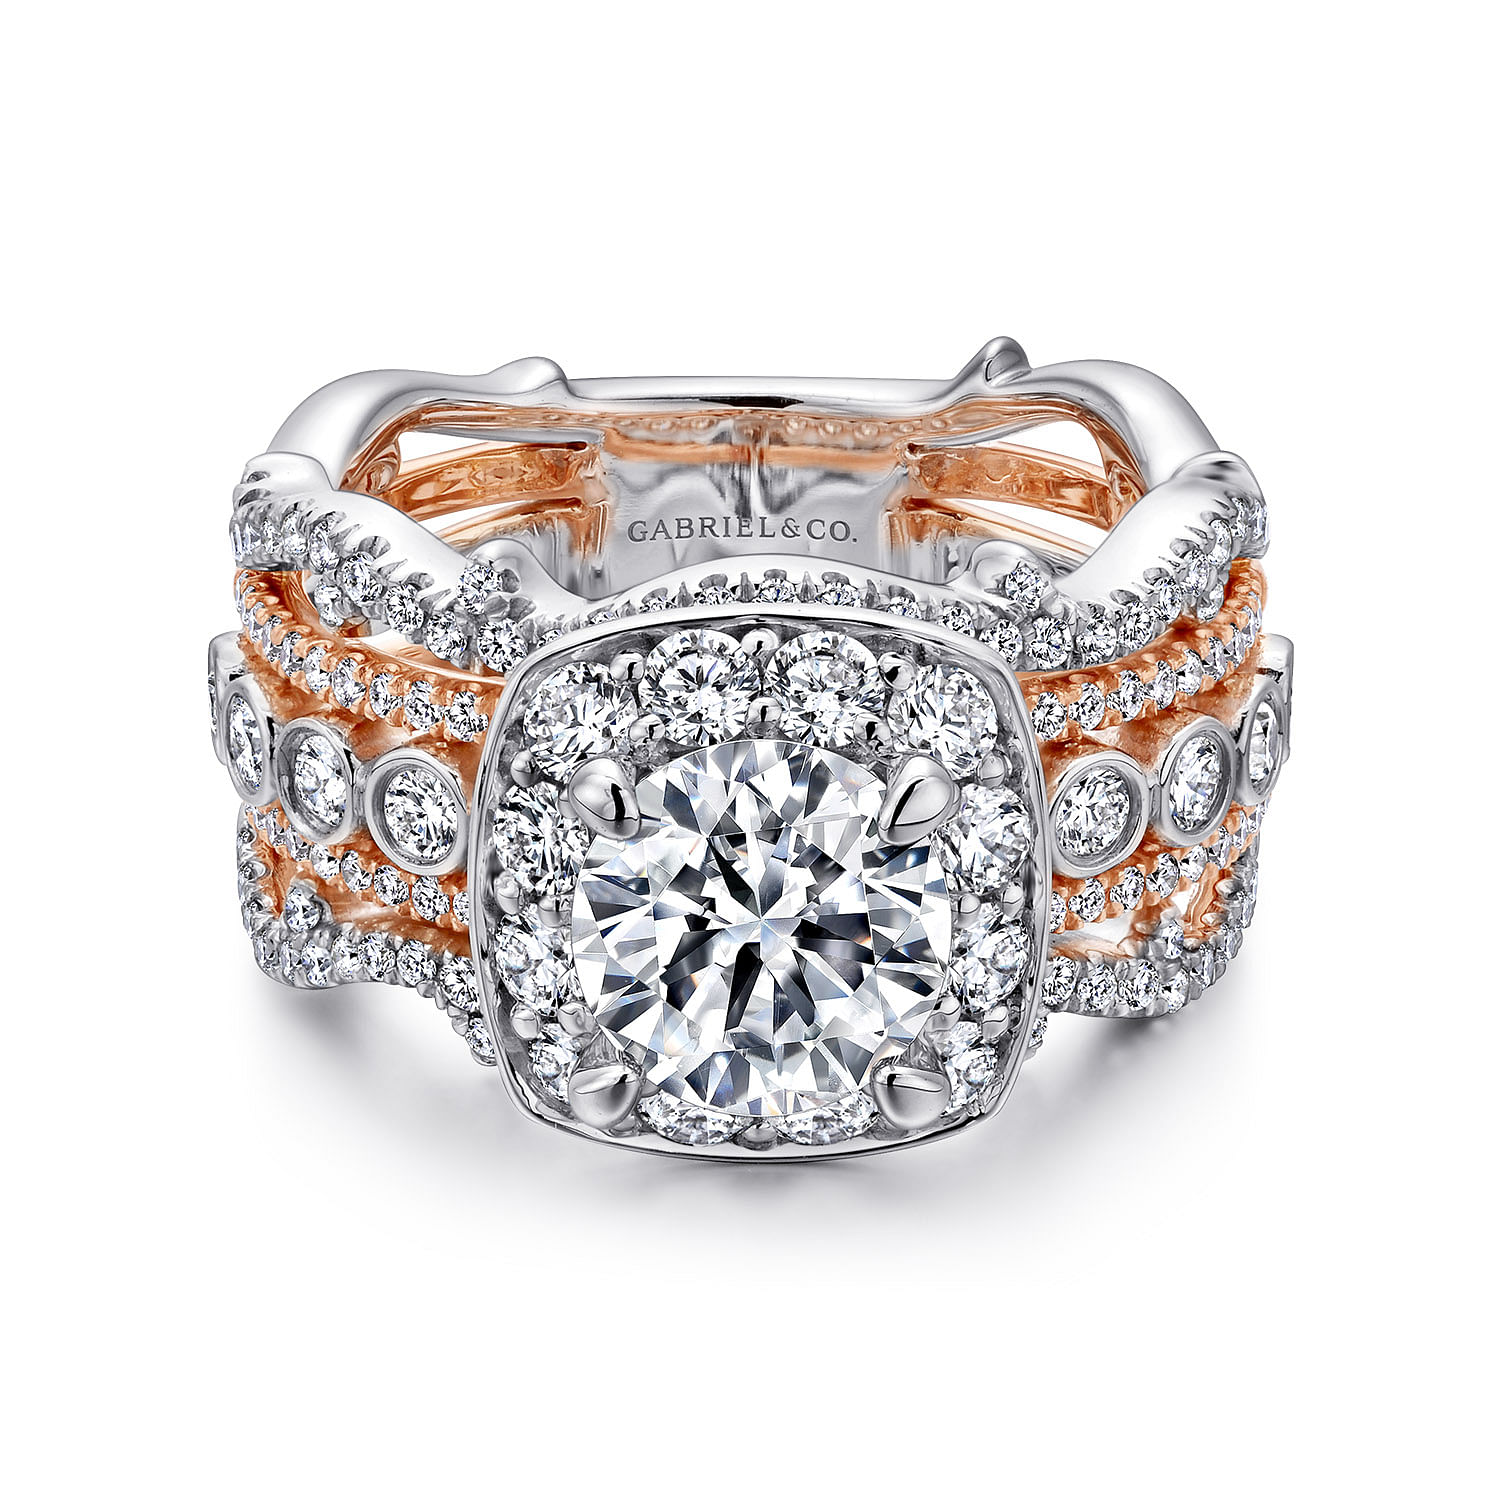 Eugenie---14K-White-Rose-Gold-Round-Halo-Diamond-Engagement-Ring1